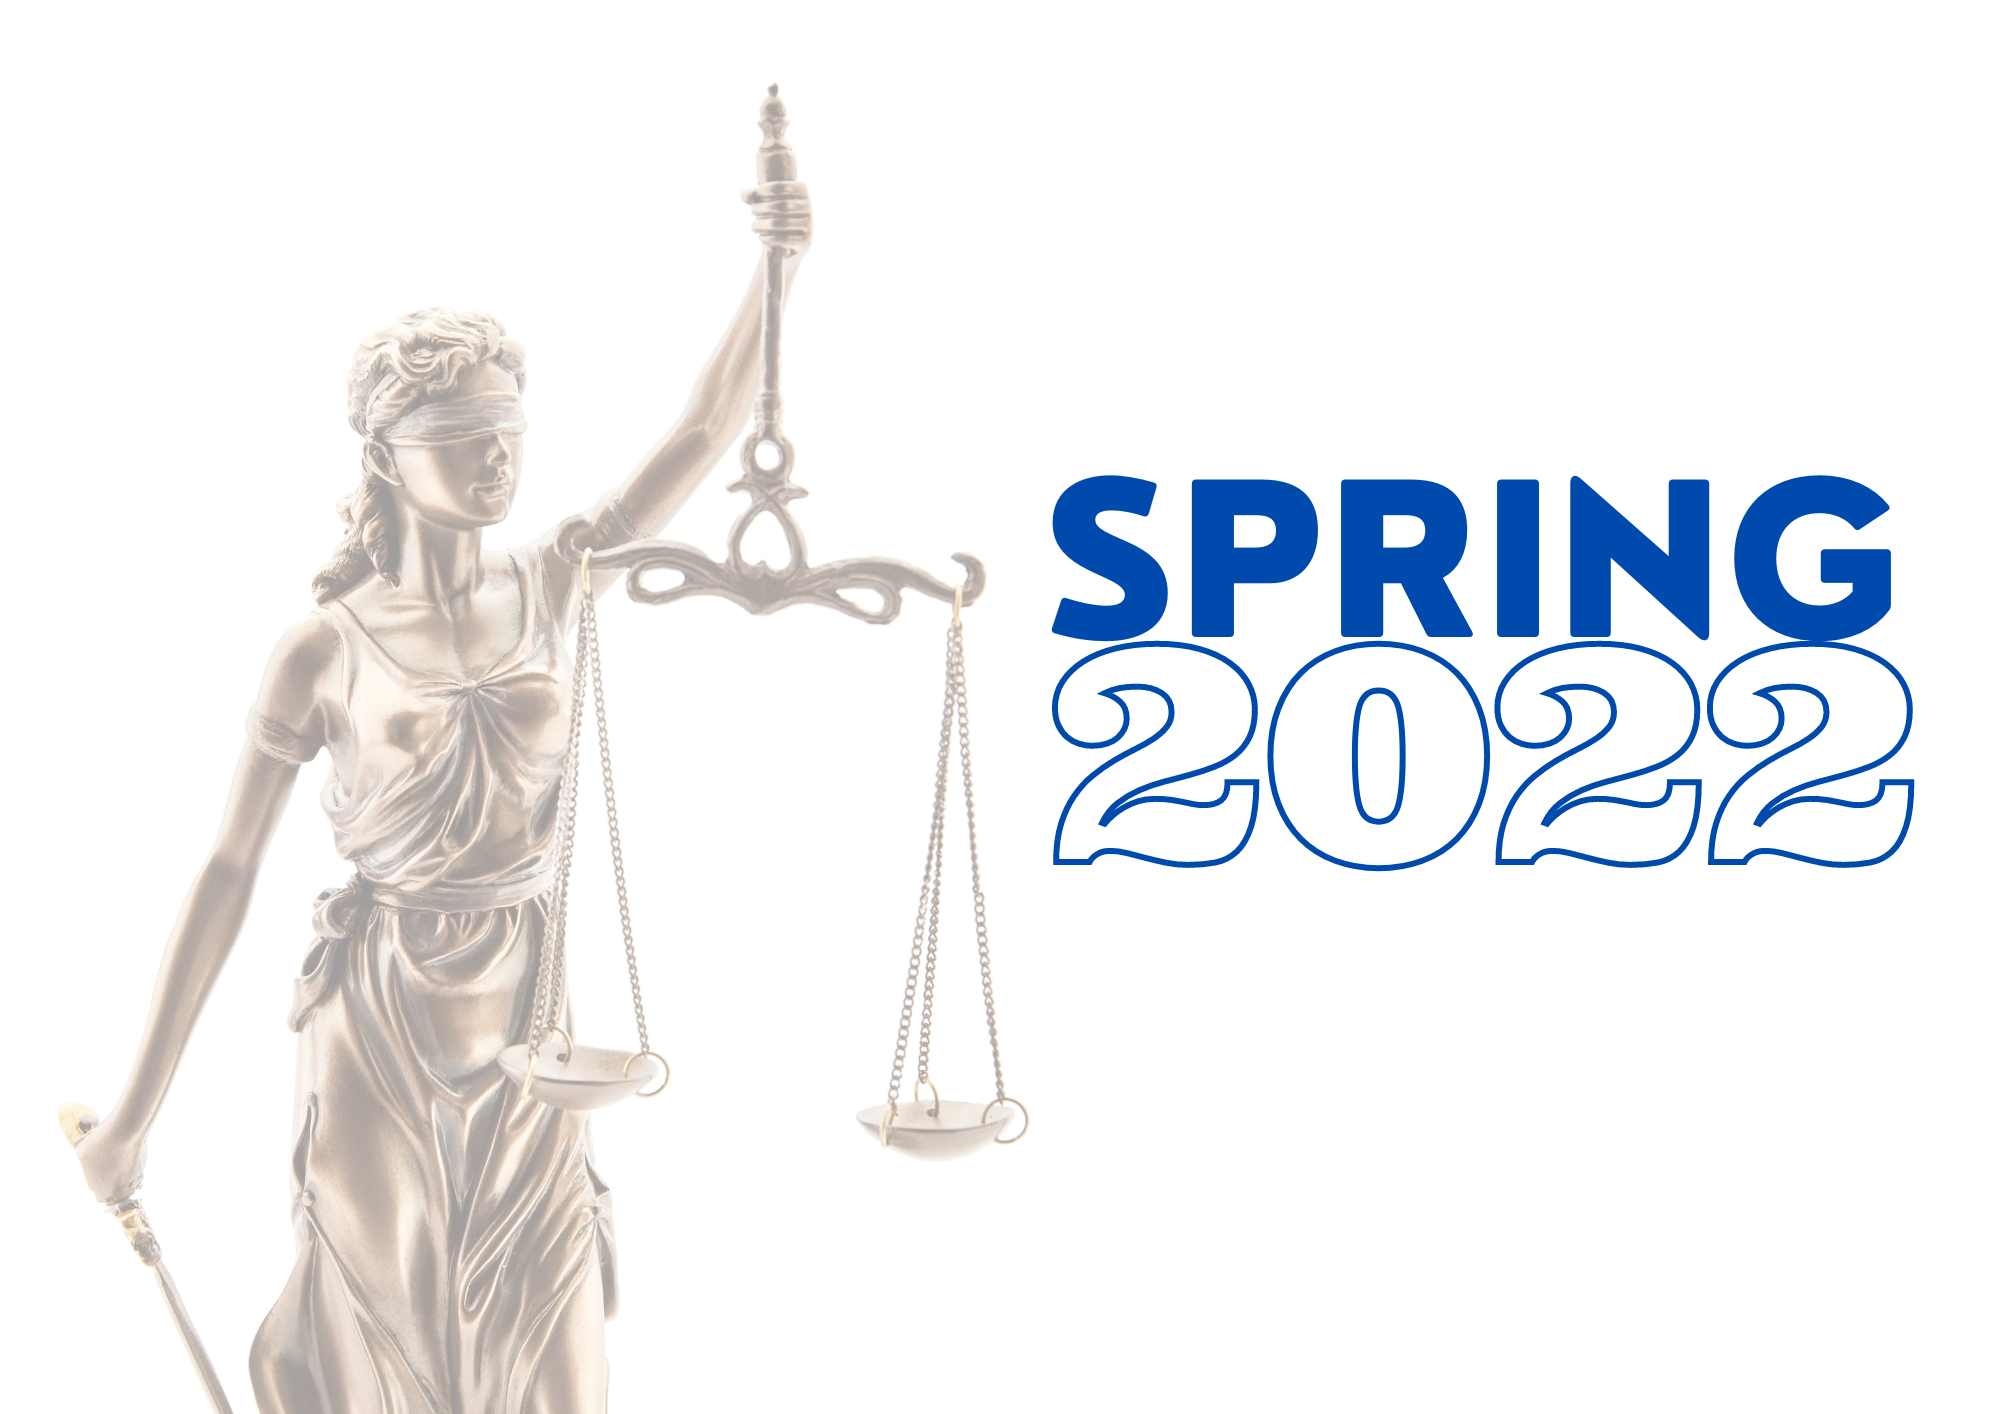 ICJ MA Spring 2022